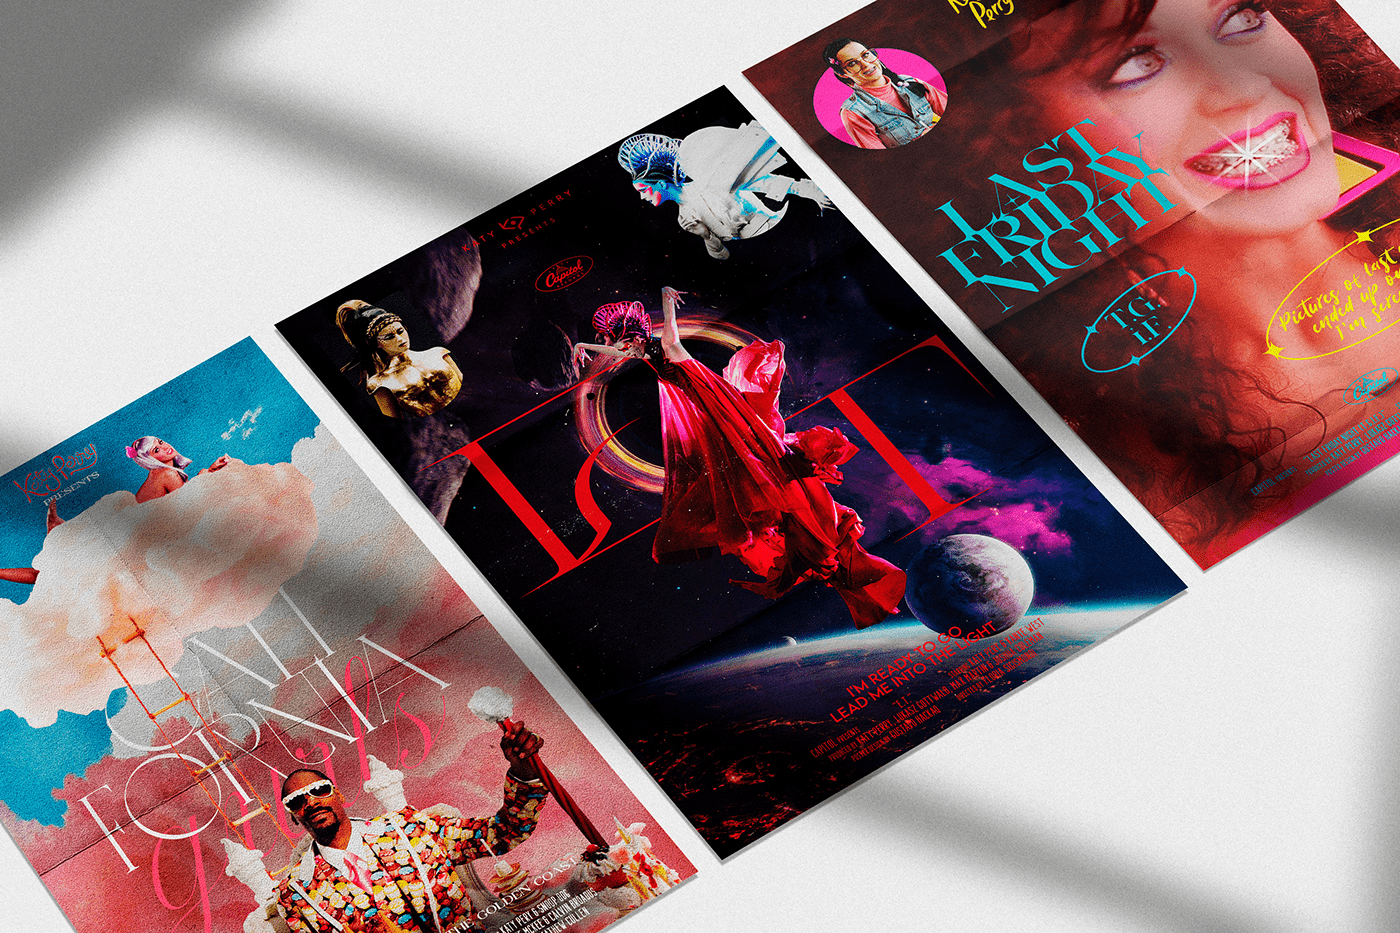 aesthetic art design Katy Perry music musica poster Poster Design teenage dream pop